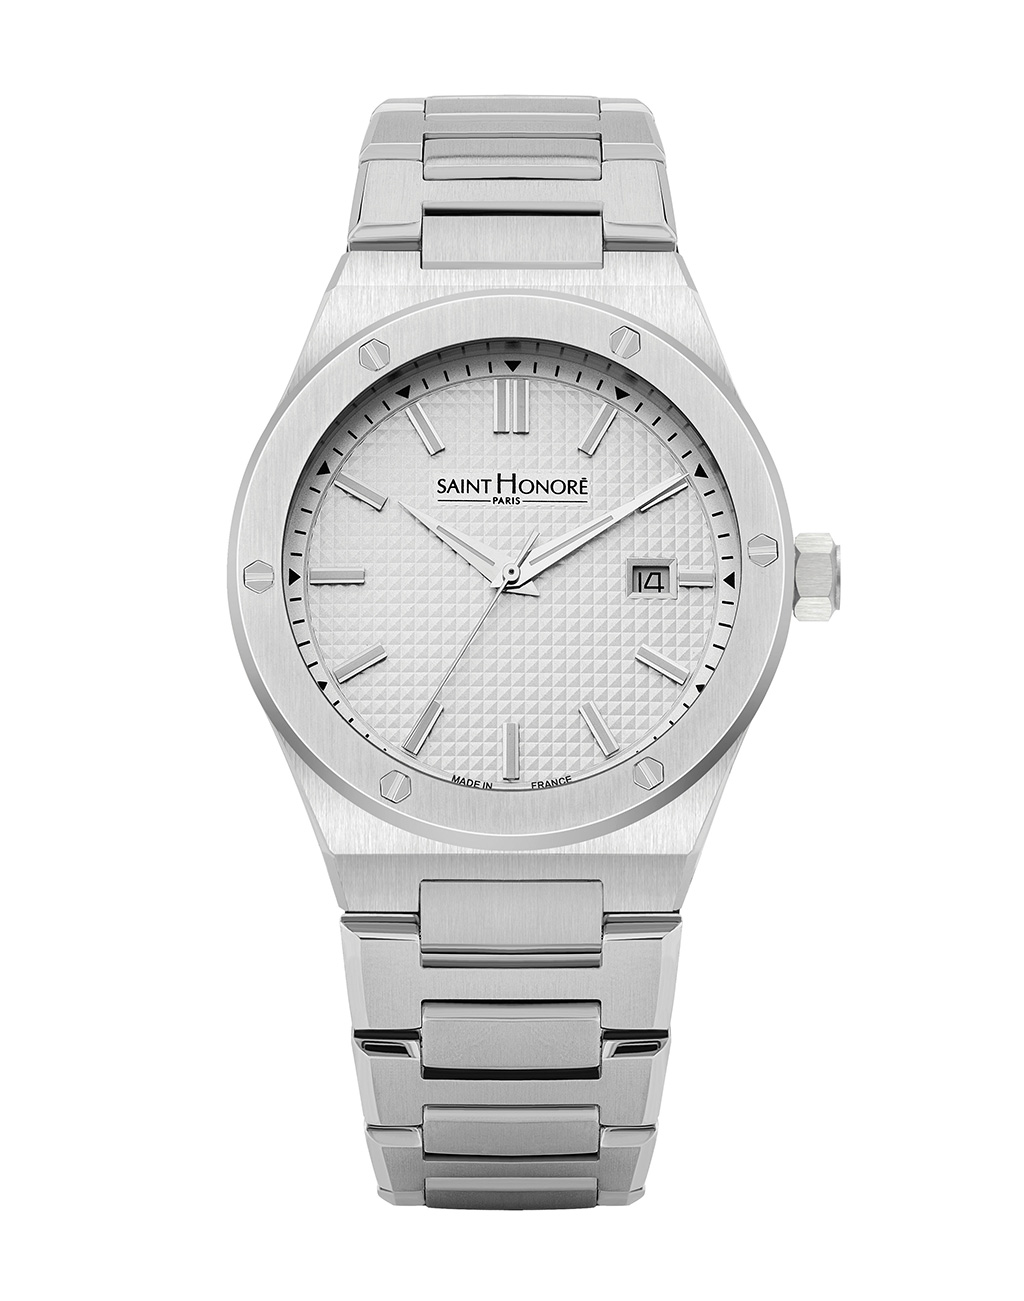 HAUSSMAN II Men's watch - stainless steel, white dial, metal strap